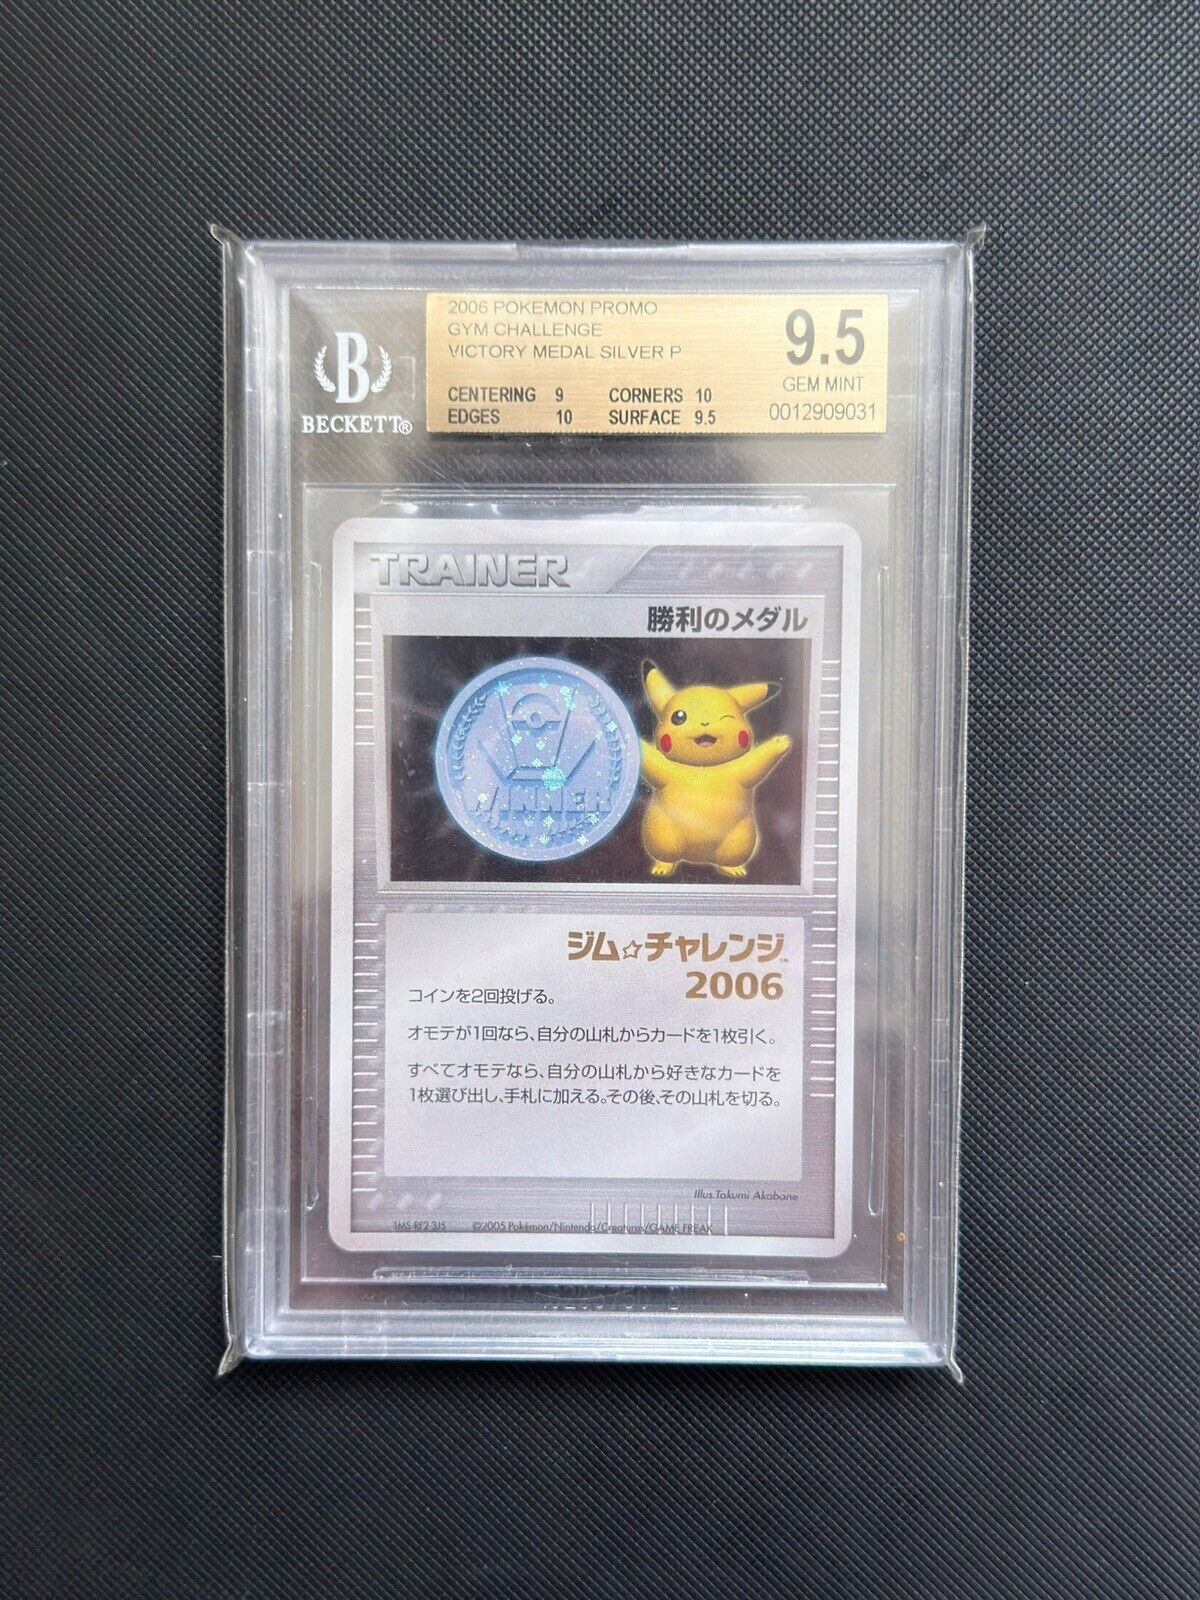 2006 Japanese Pokemon BGS 9.5 Pikachu GYM Challenge Medal Silver Stamp 12909031